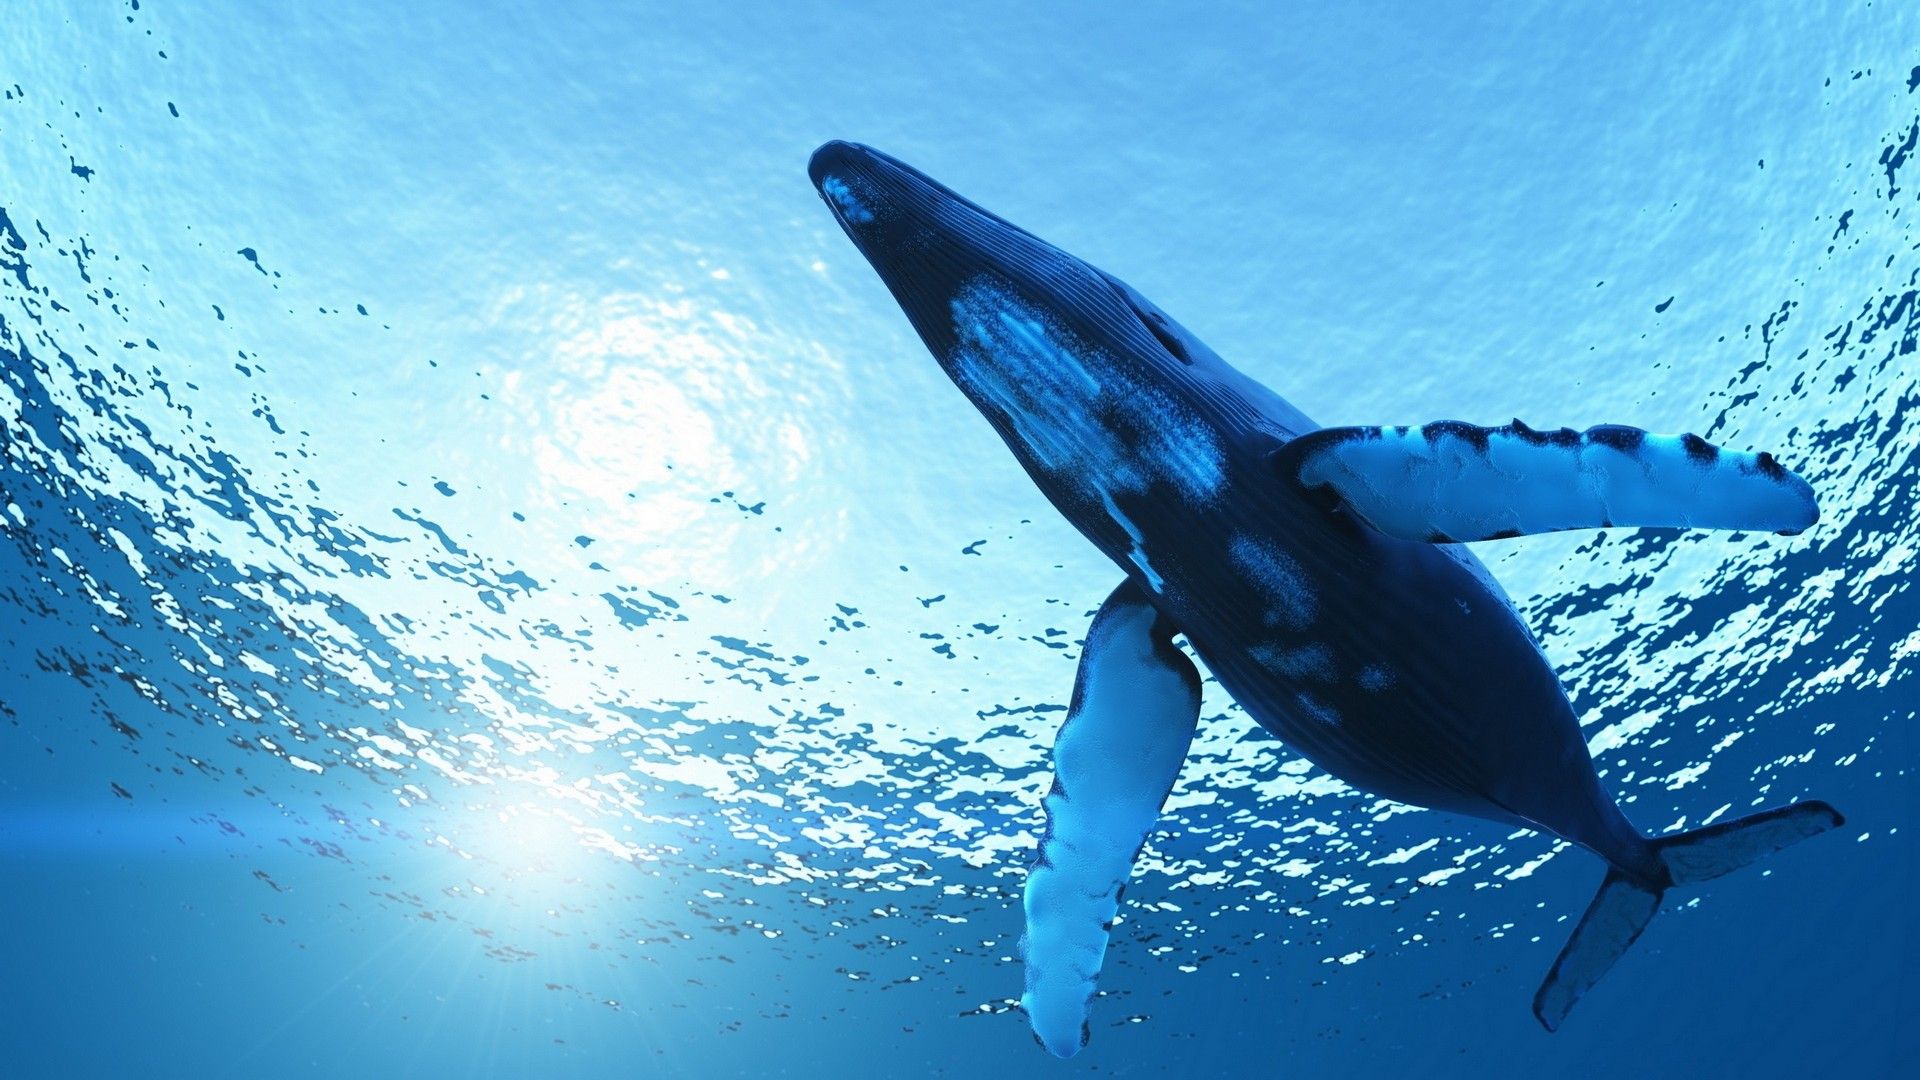 balena blu wallpaper hd,blu,squalo,mammifero marino,acqua,squalo balena